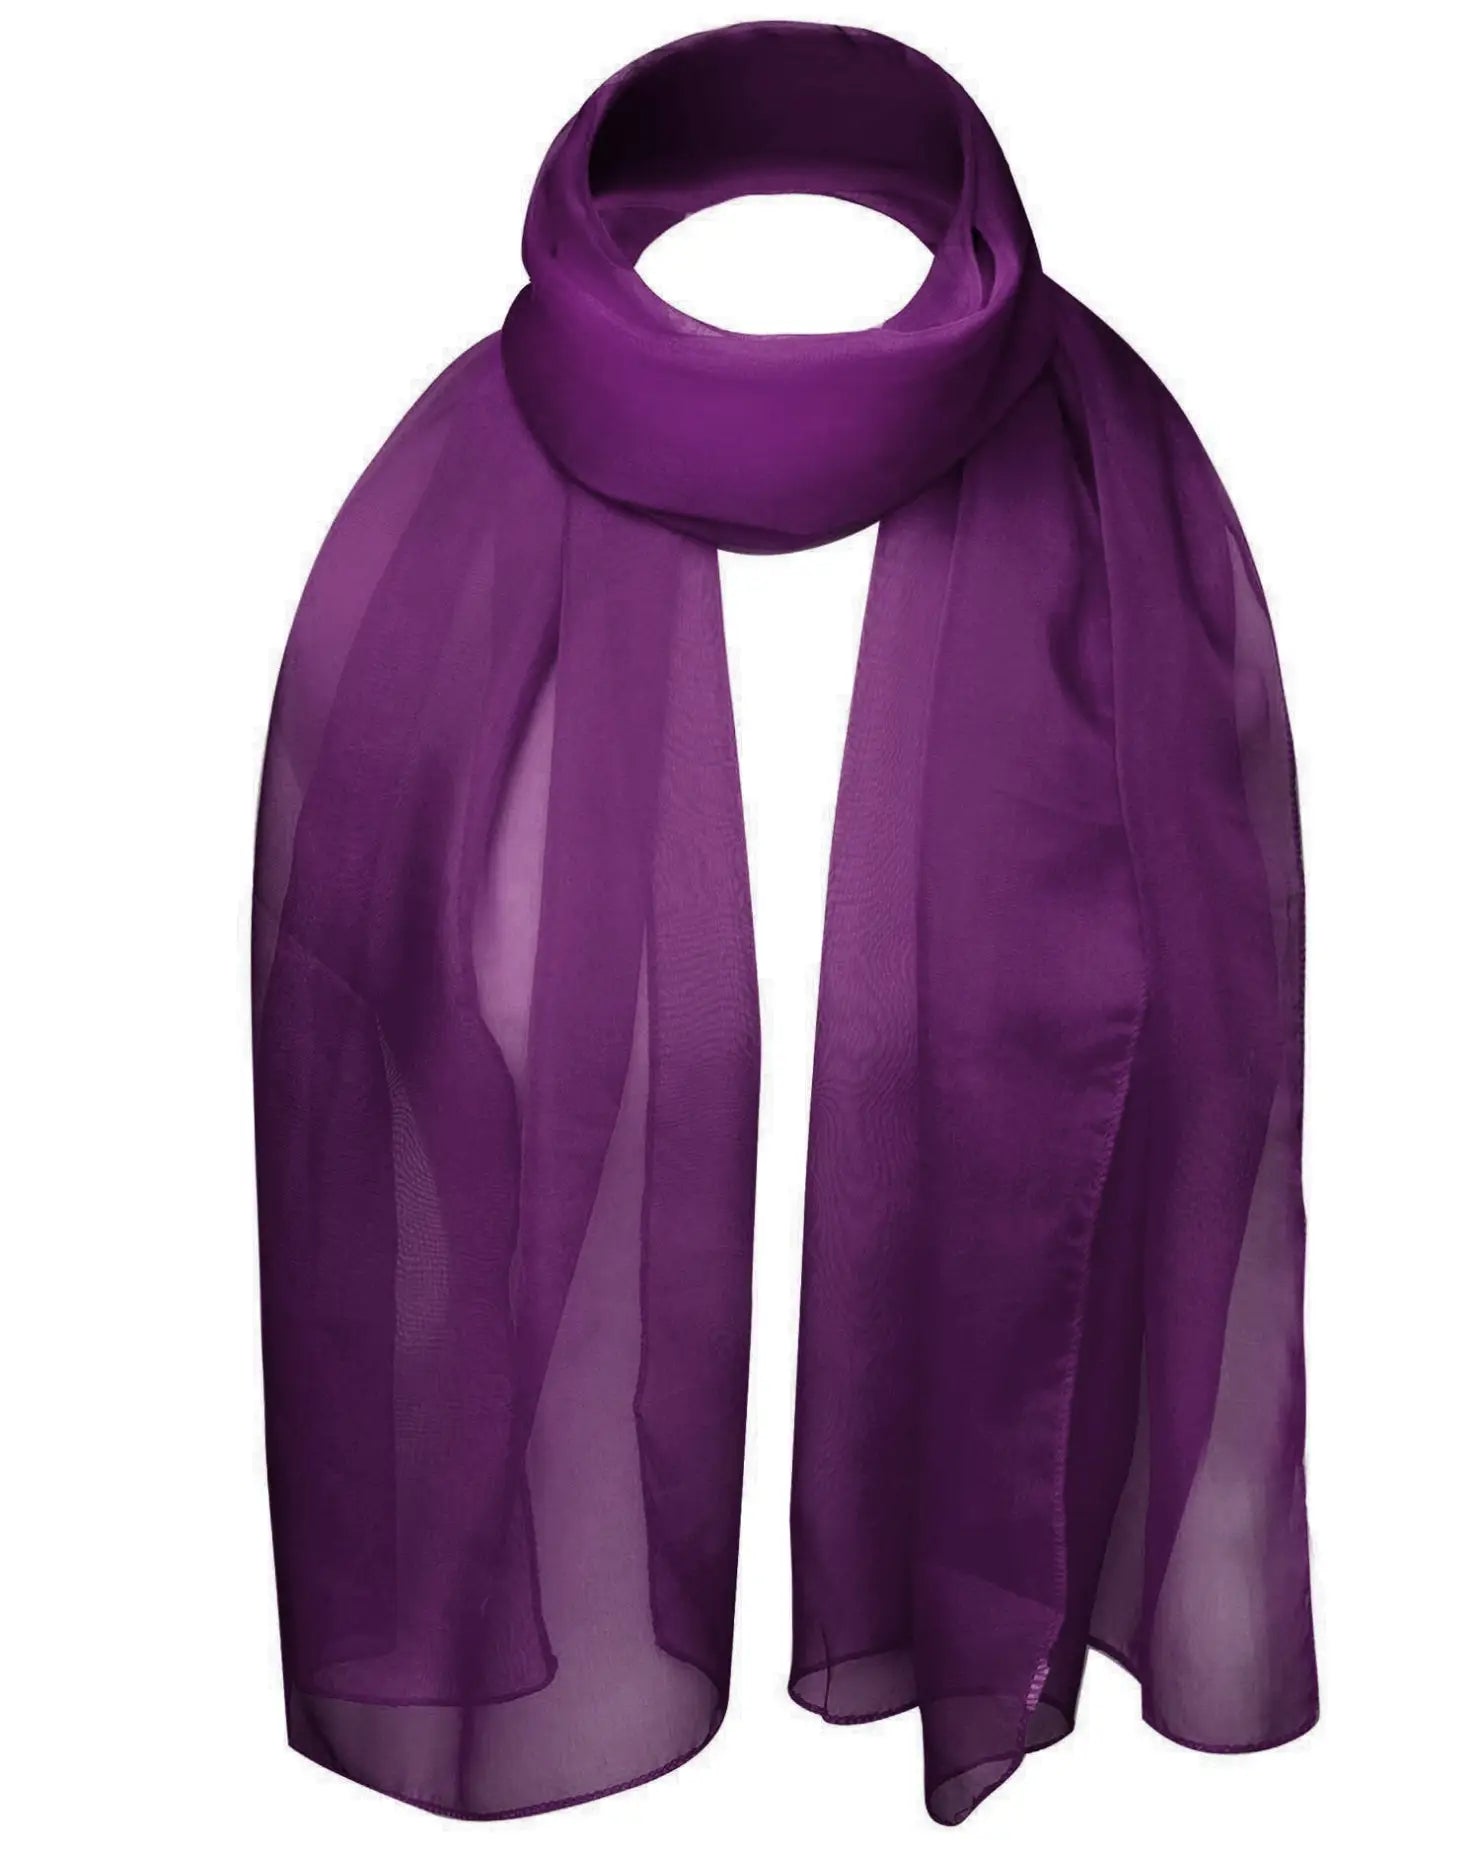 Luxurious Lightweight Chiffon Scarf in Classic Plain Purple Design